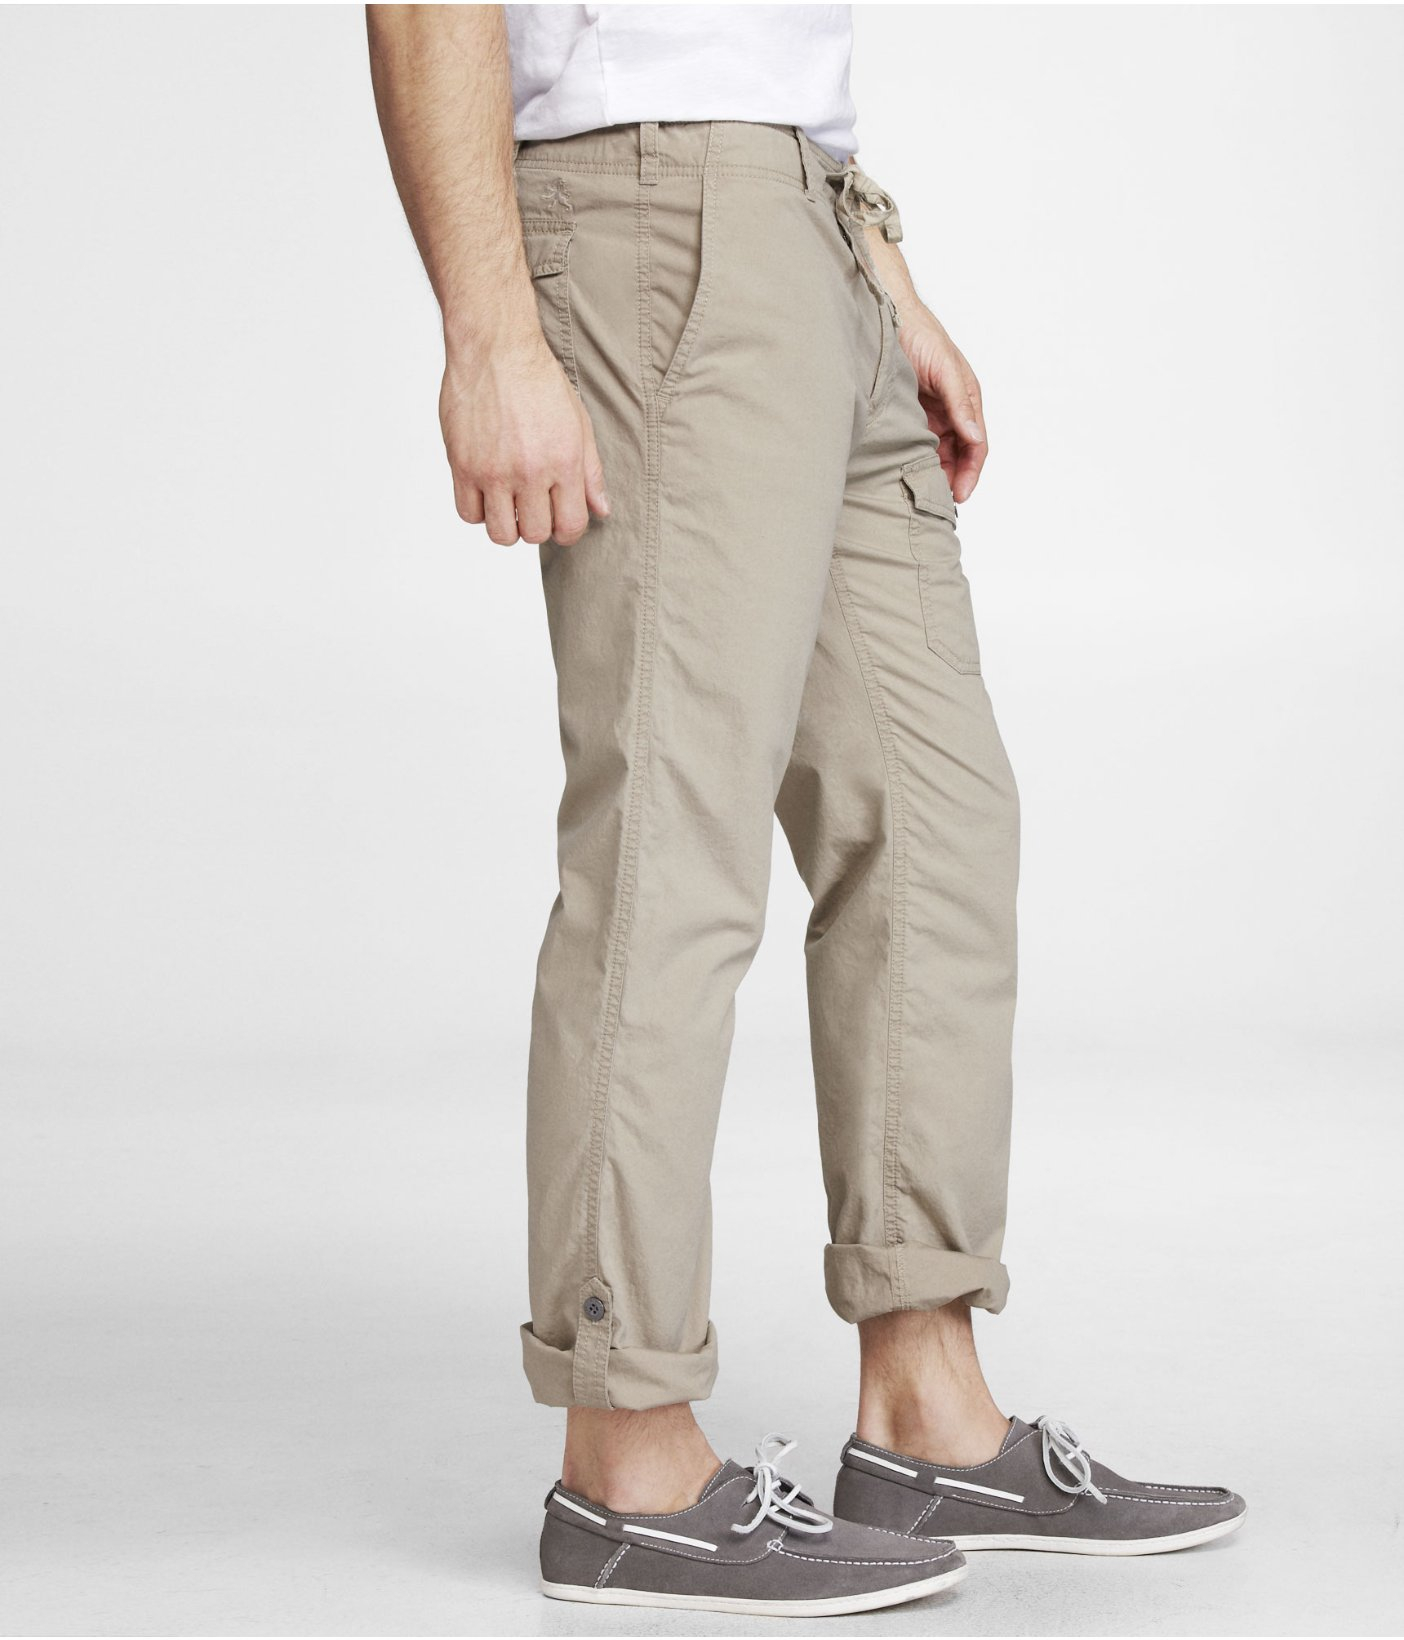 Lyst - Express Khaki Cotton Drawstring Pant in Natural for Men